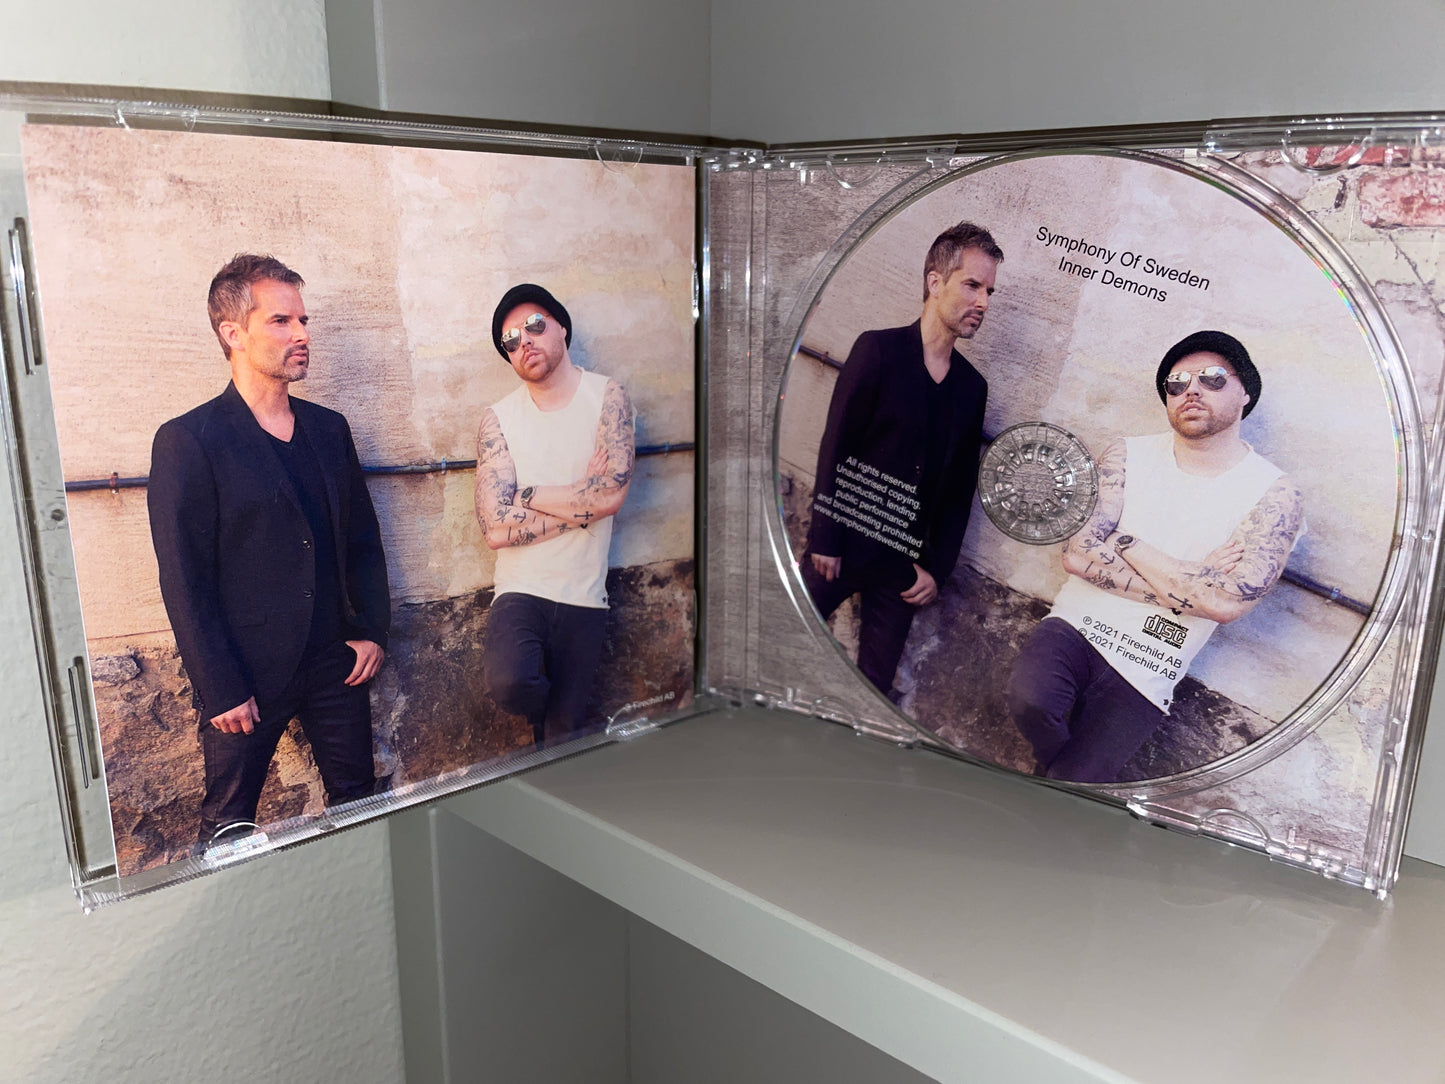 INNER DEMONS - CD Album in Jewel case